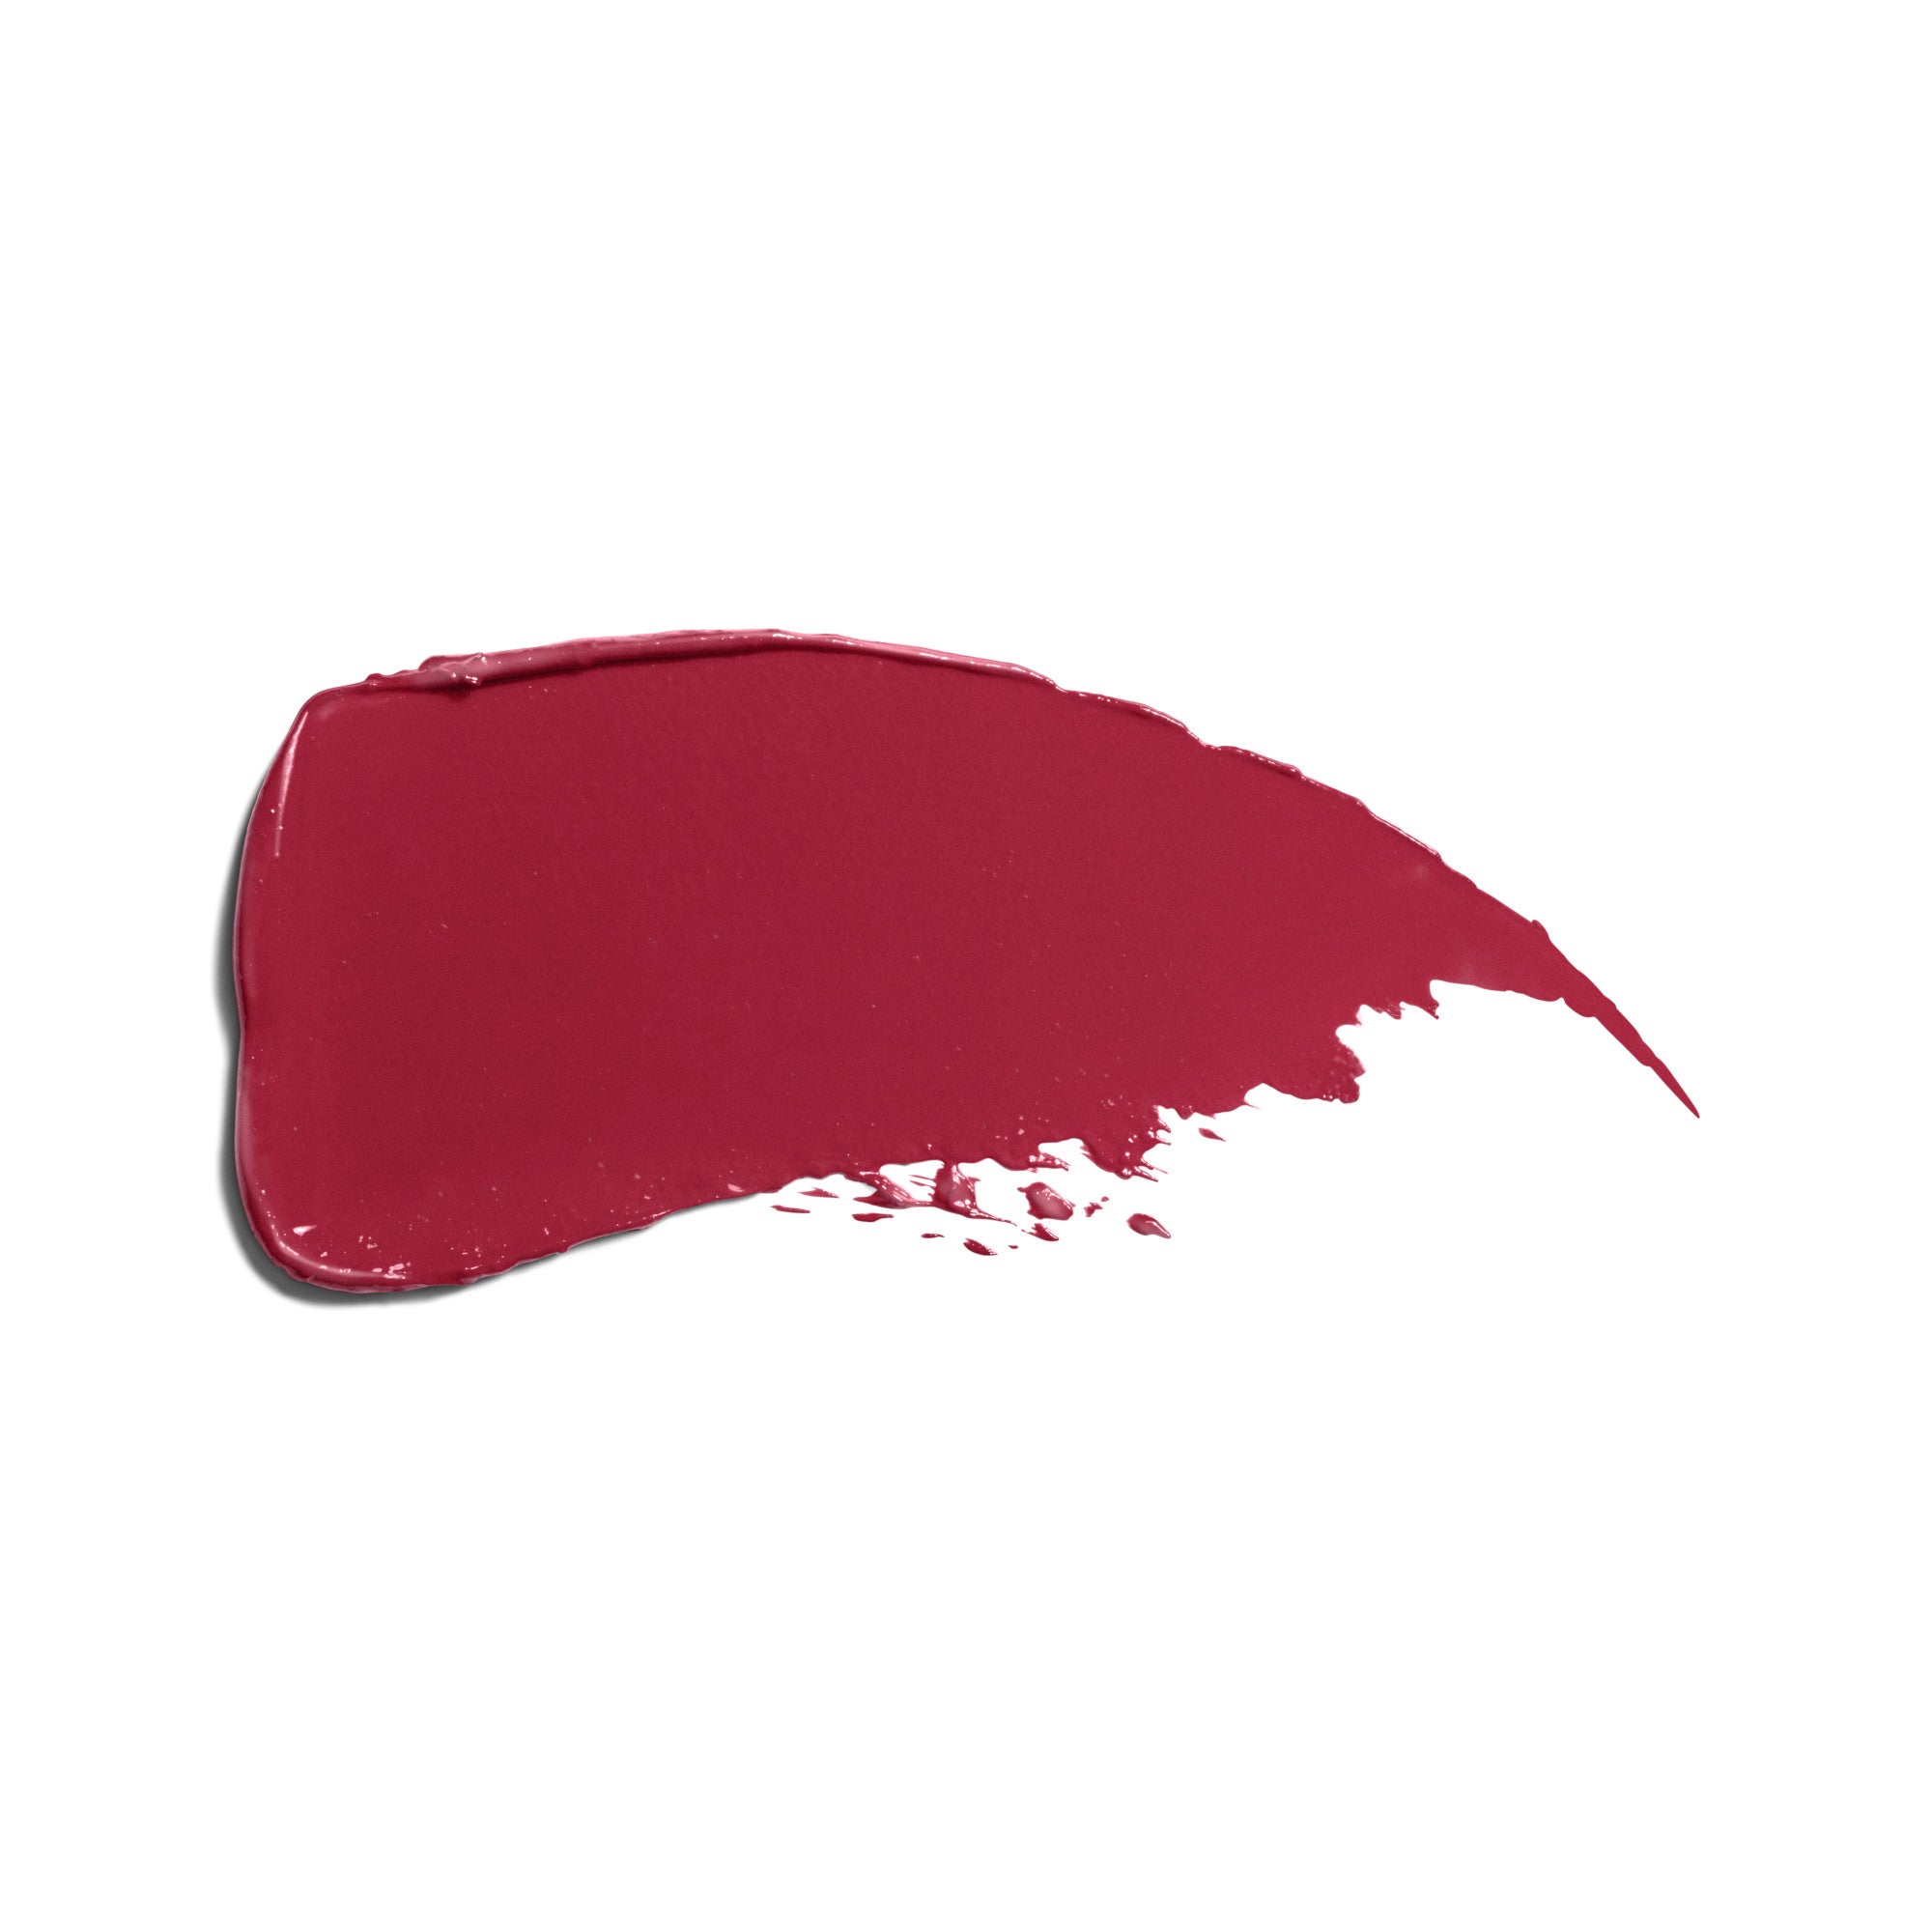 Shiseido TechnoSatin Long Lasting & Hydrating Gel Lipstick scarlet cluster